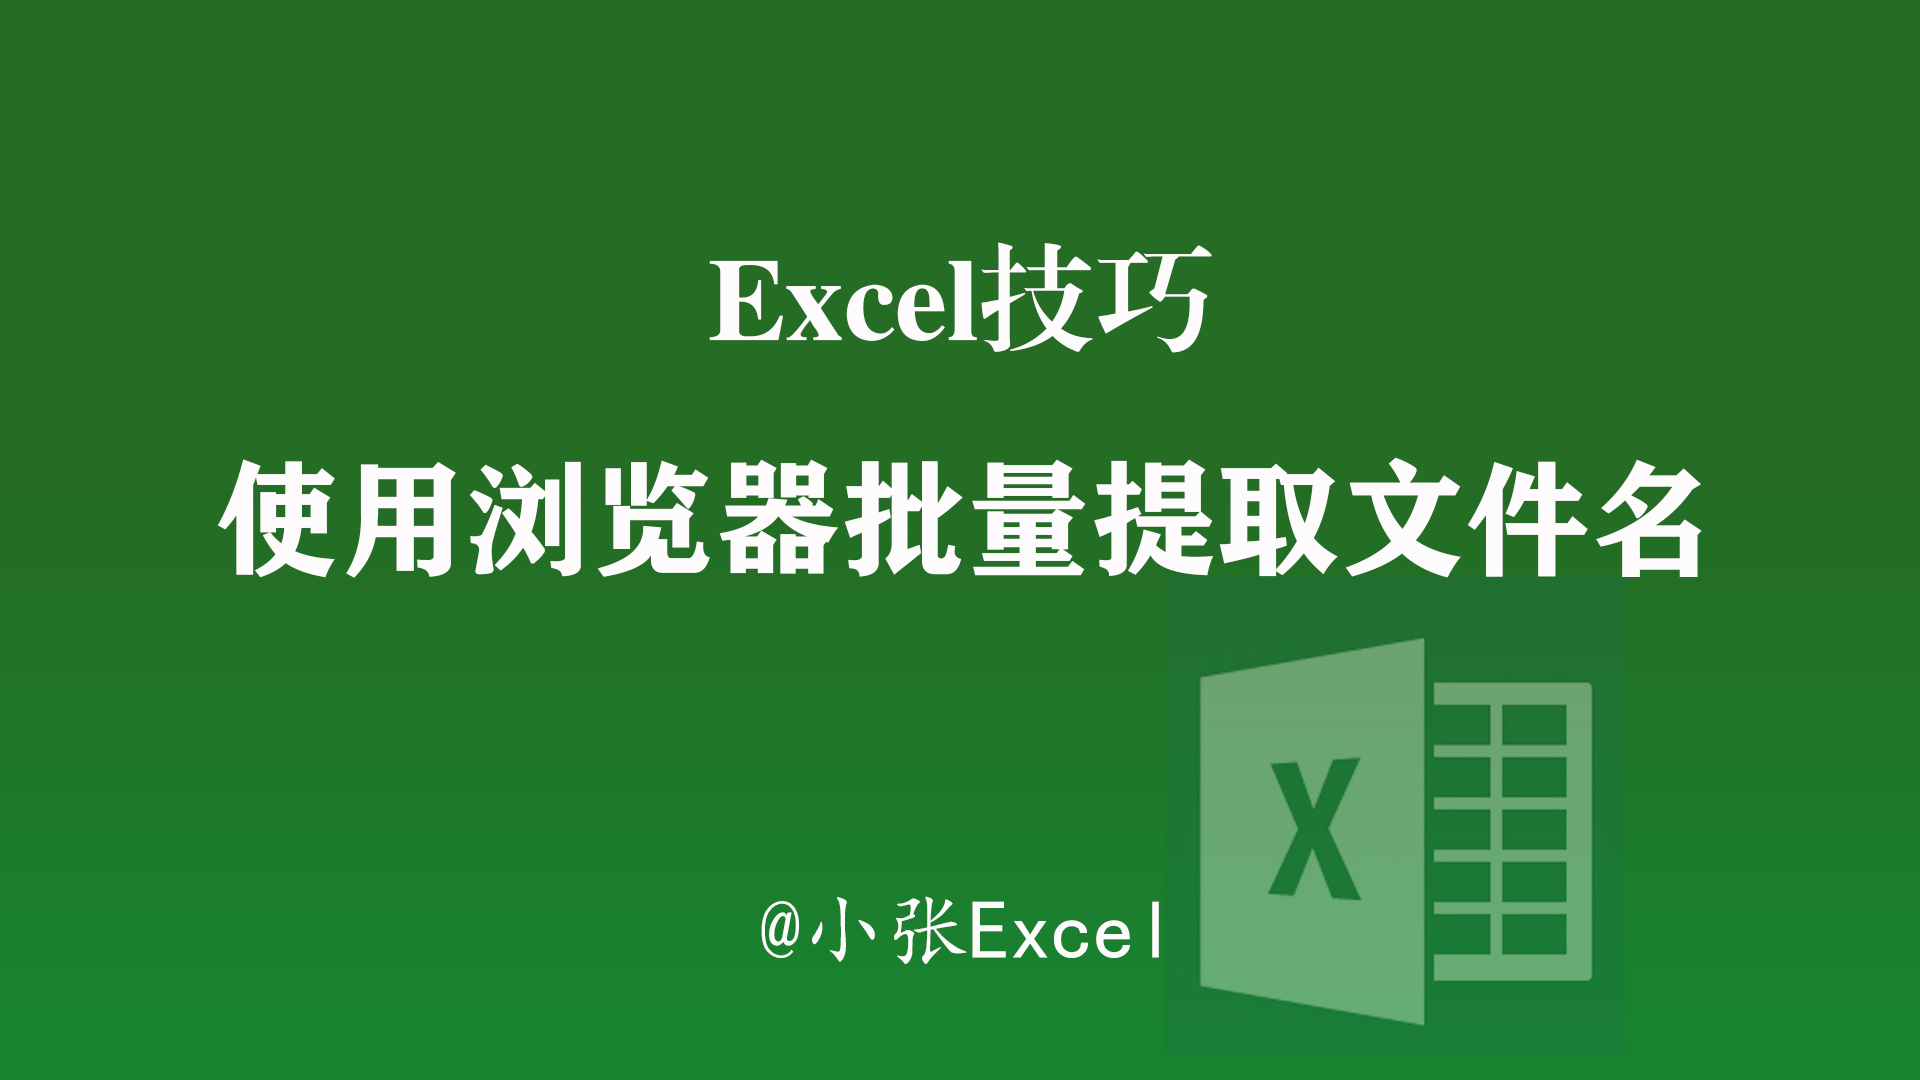 Excel技巧: 使用浏览器批量提取文件名到表格中